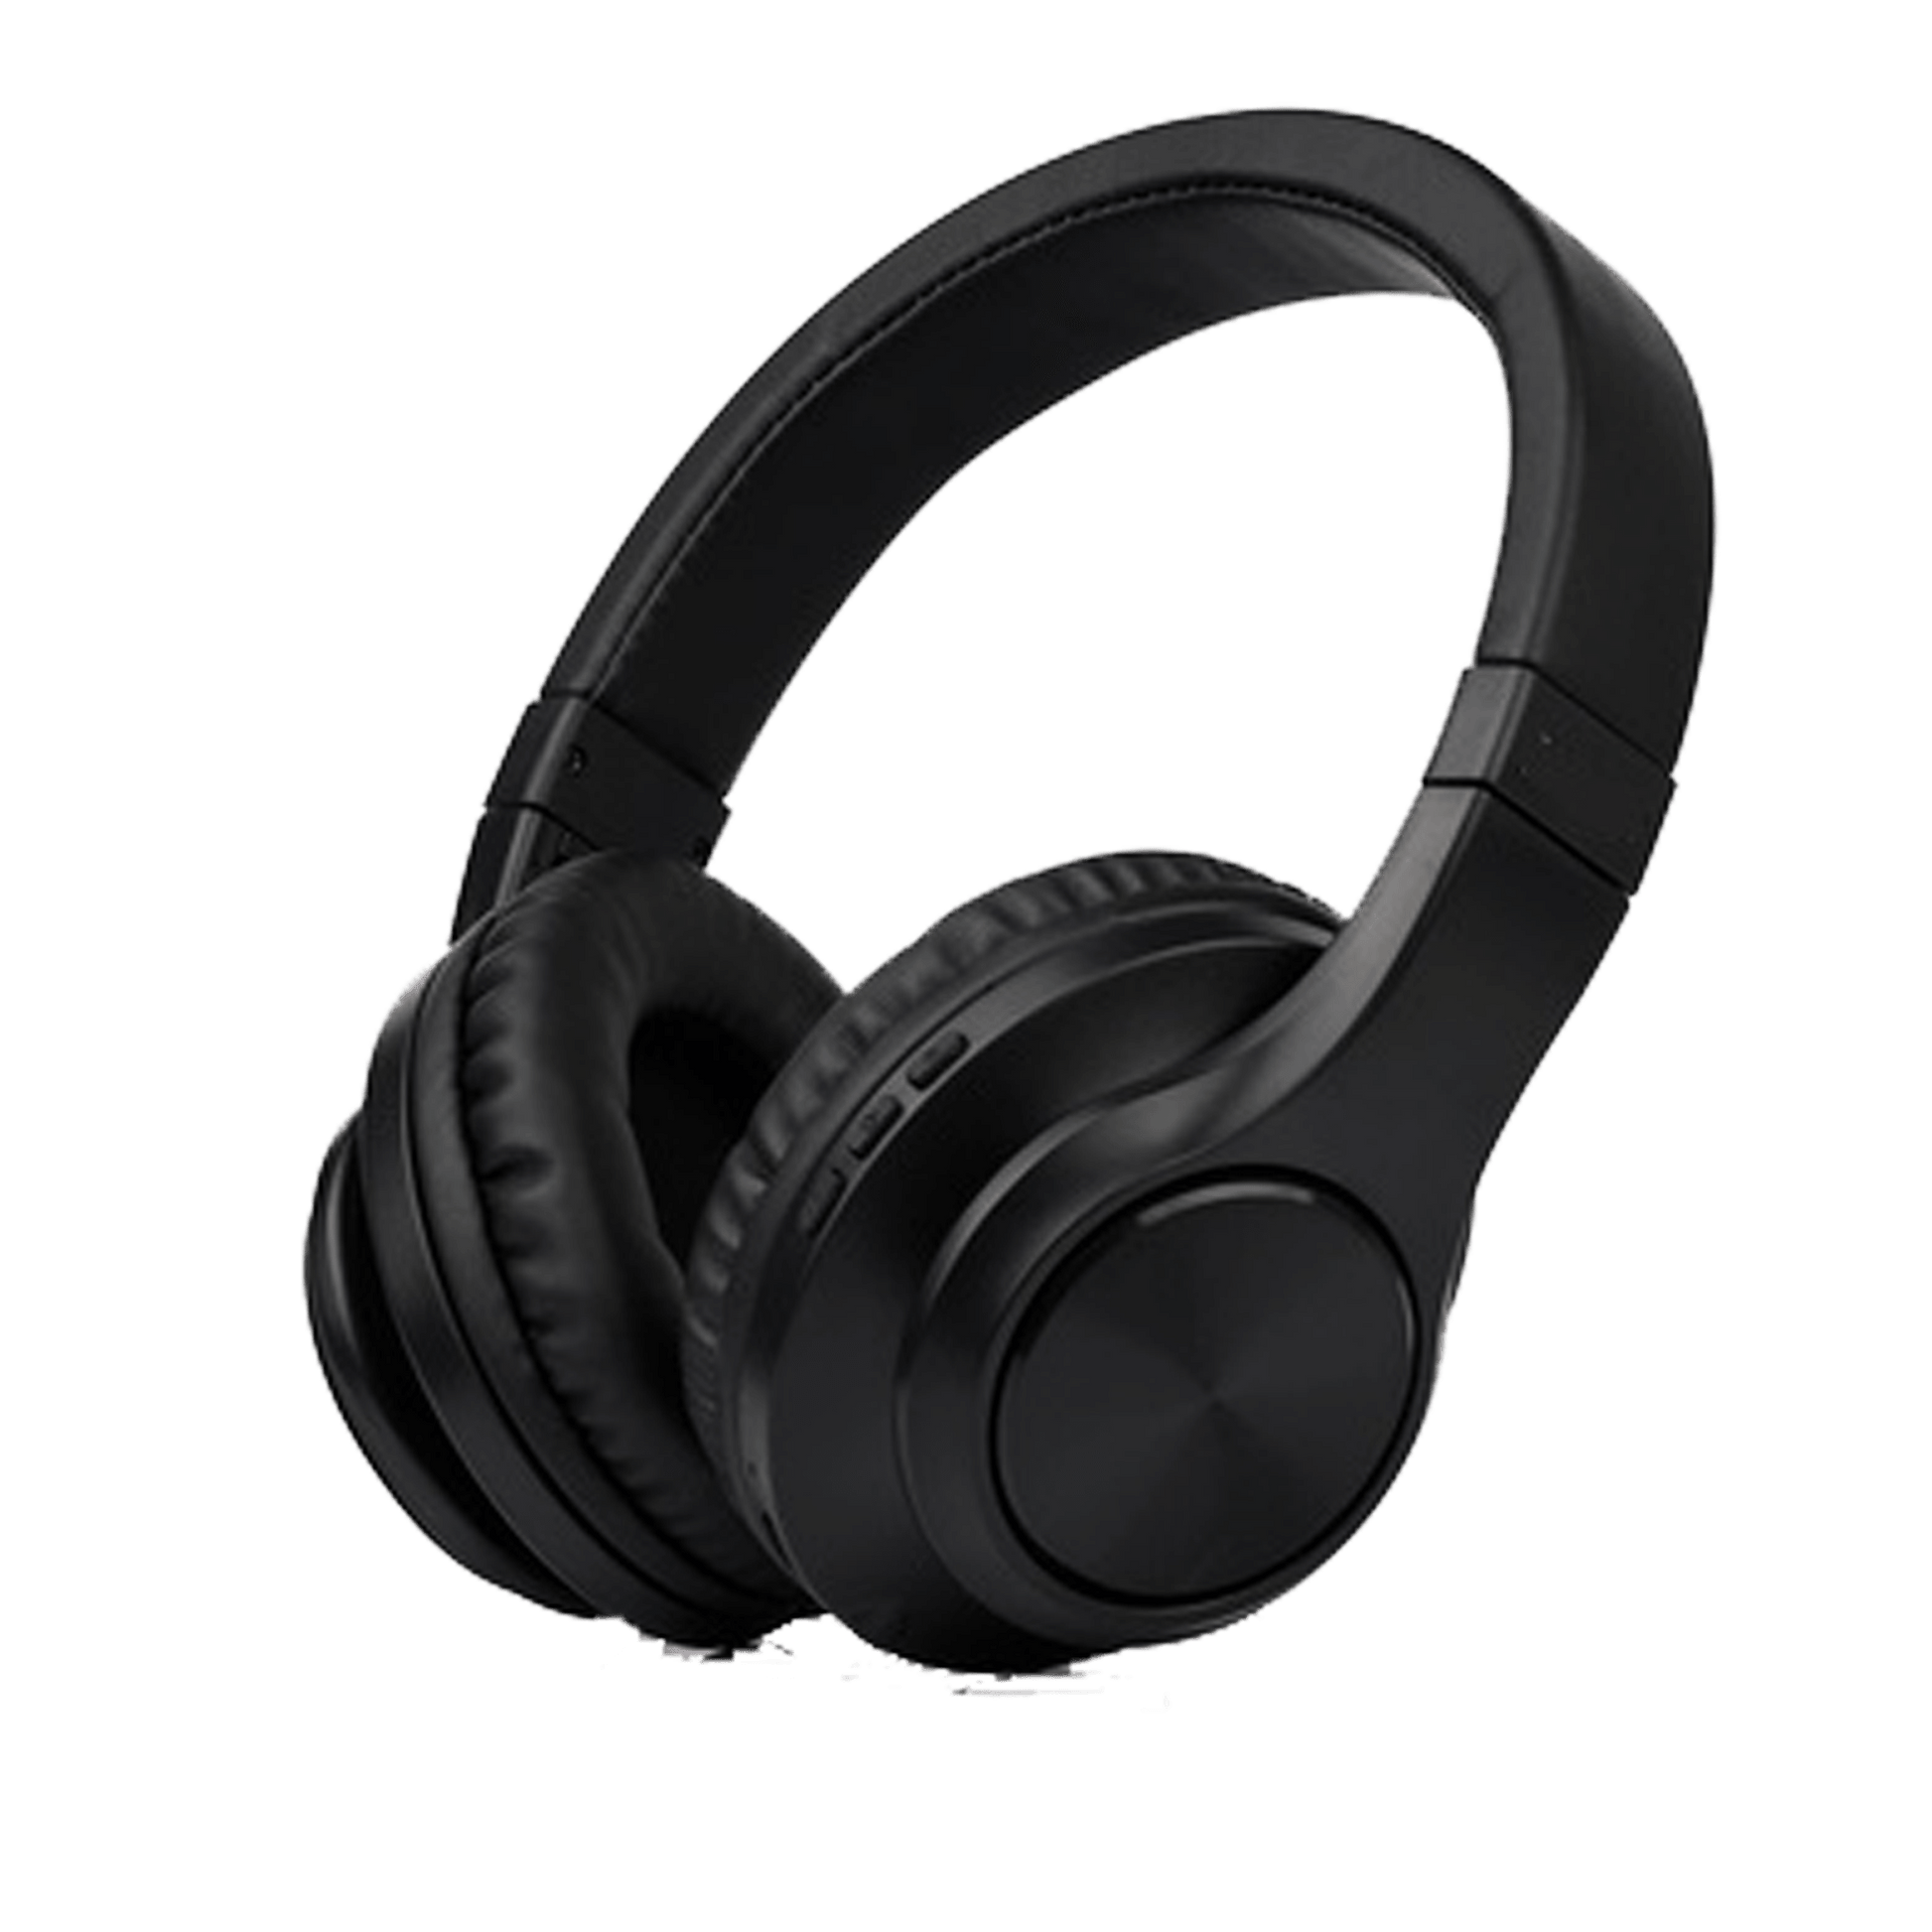 wireless black headphones frontal side view